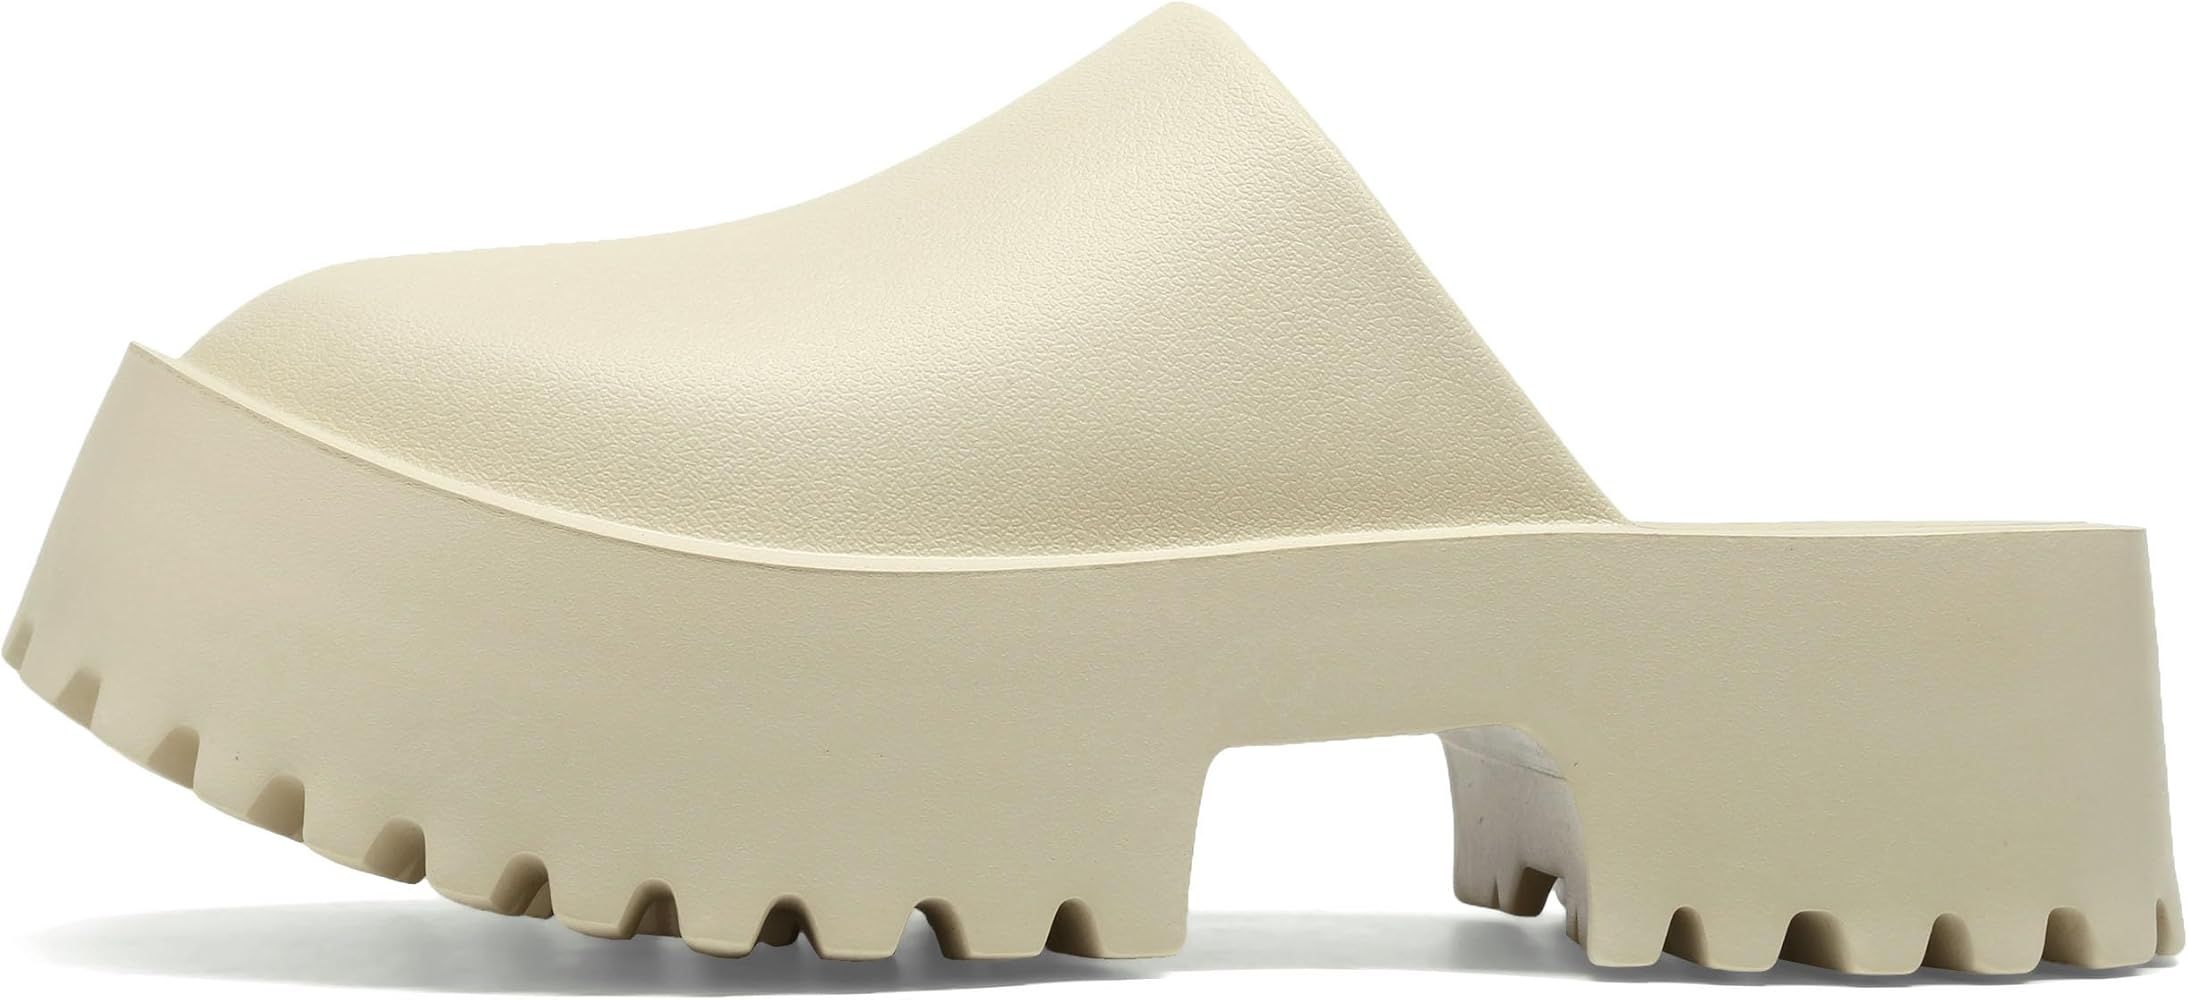 Brand: SANIOOOI
SANIOOOI Women's Platform Mules Colgs,Slip on Wedge Thick Sole Colg Slippers Cute Fa | Amazon (US)